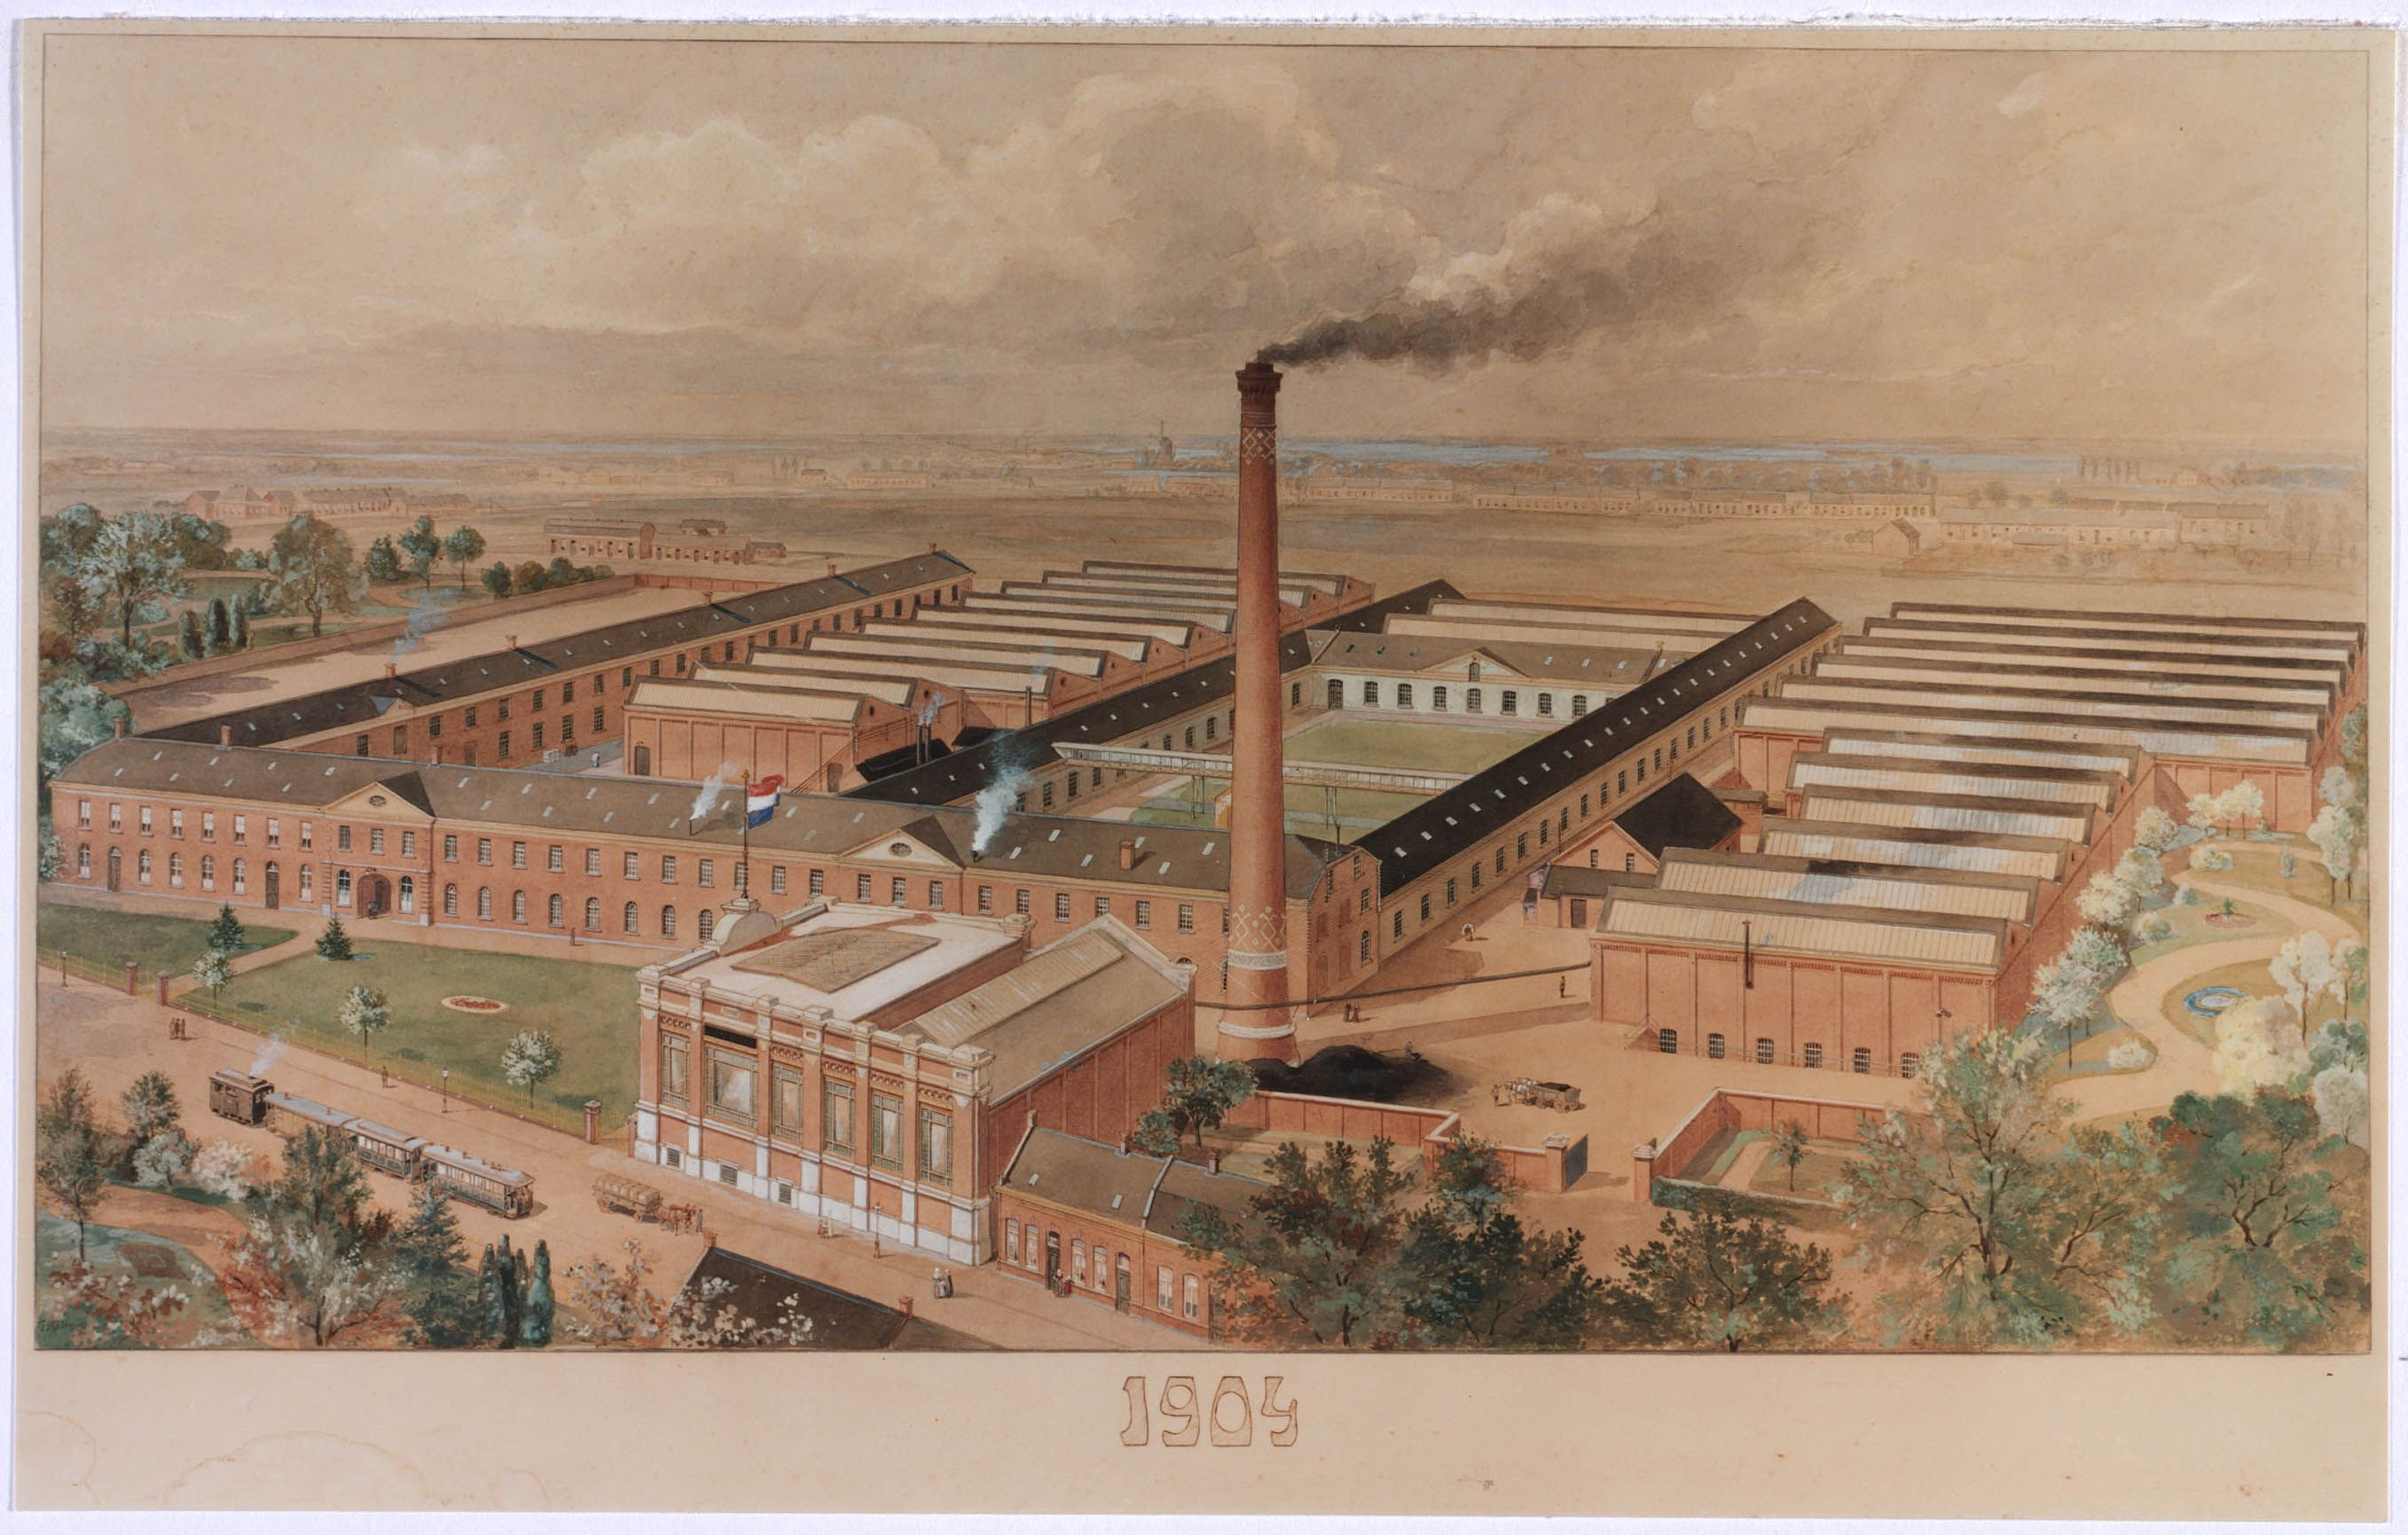 BeKa wollenstoffenfabriek 1904